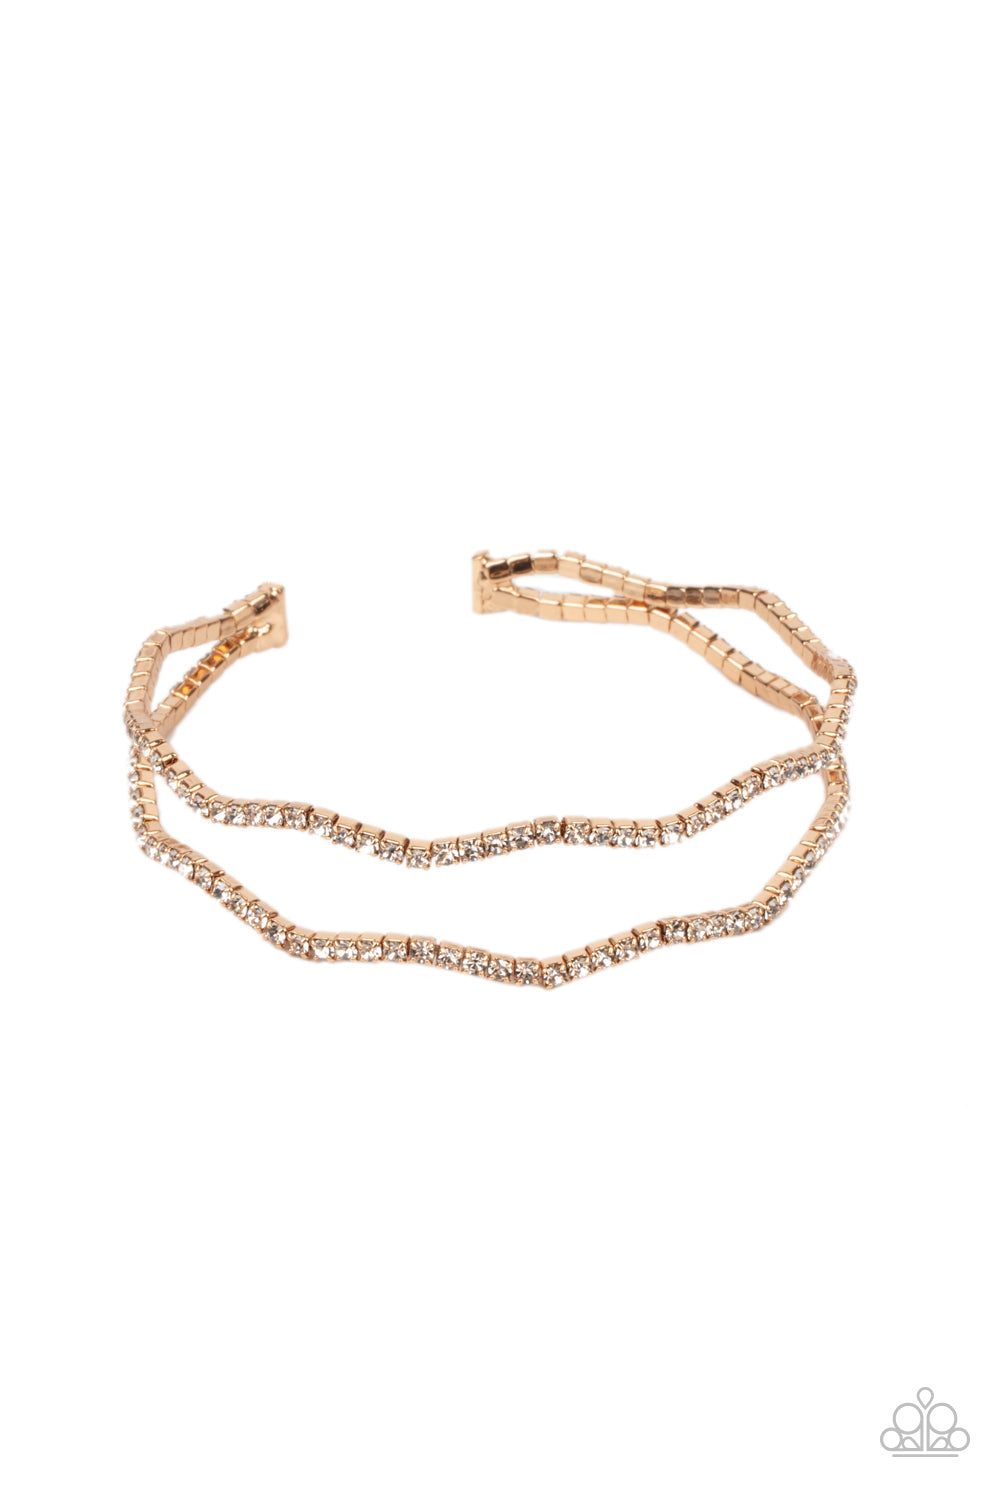 Delicate Dazzle - Gold Cuff Bracelet - Princess Glam Shop